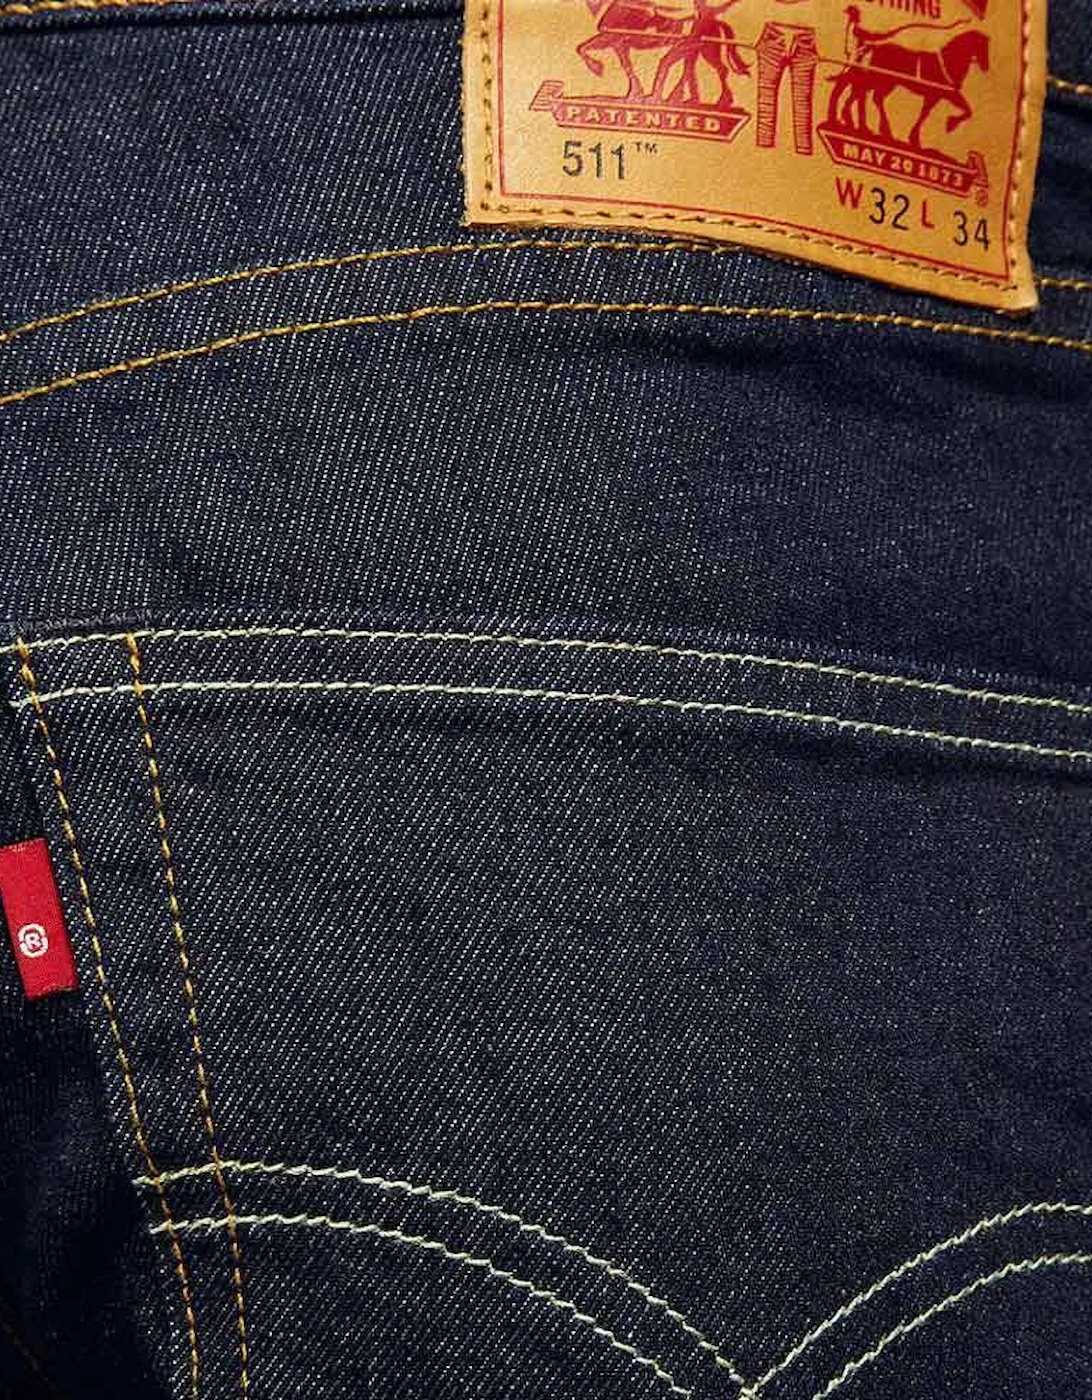 Levis 511 Slim Fit Jeans Rock Cod Indigo Denim Jeans 04511-1786